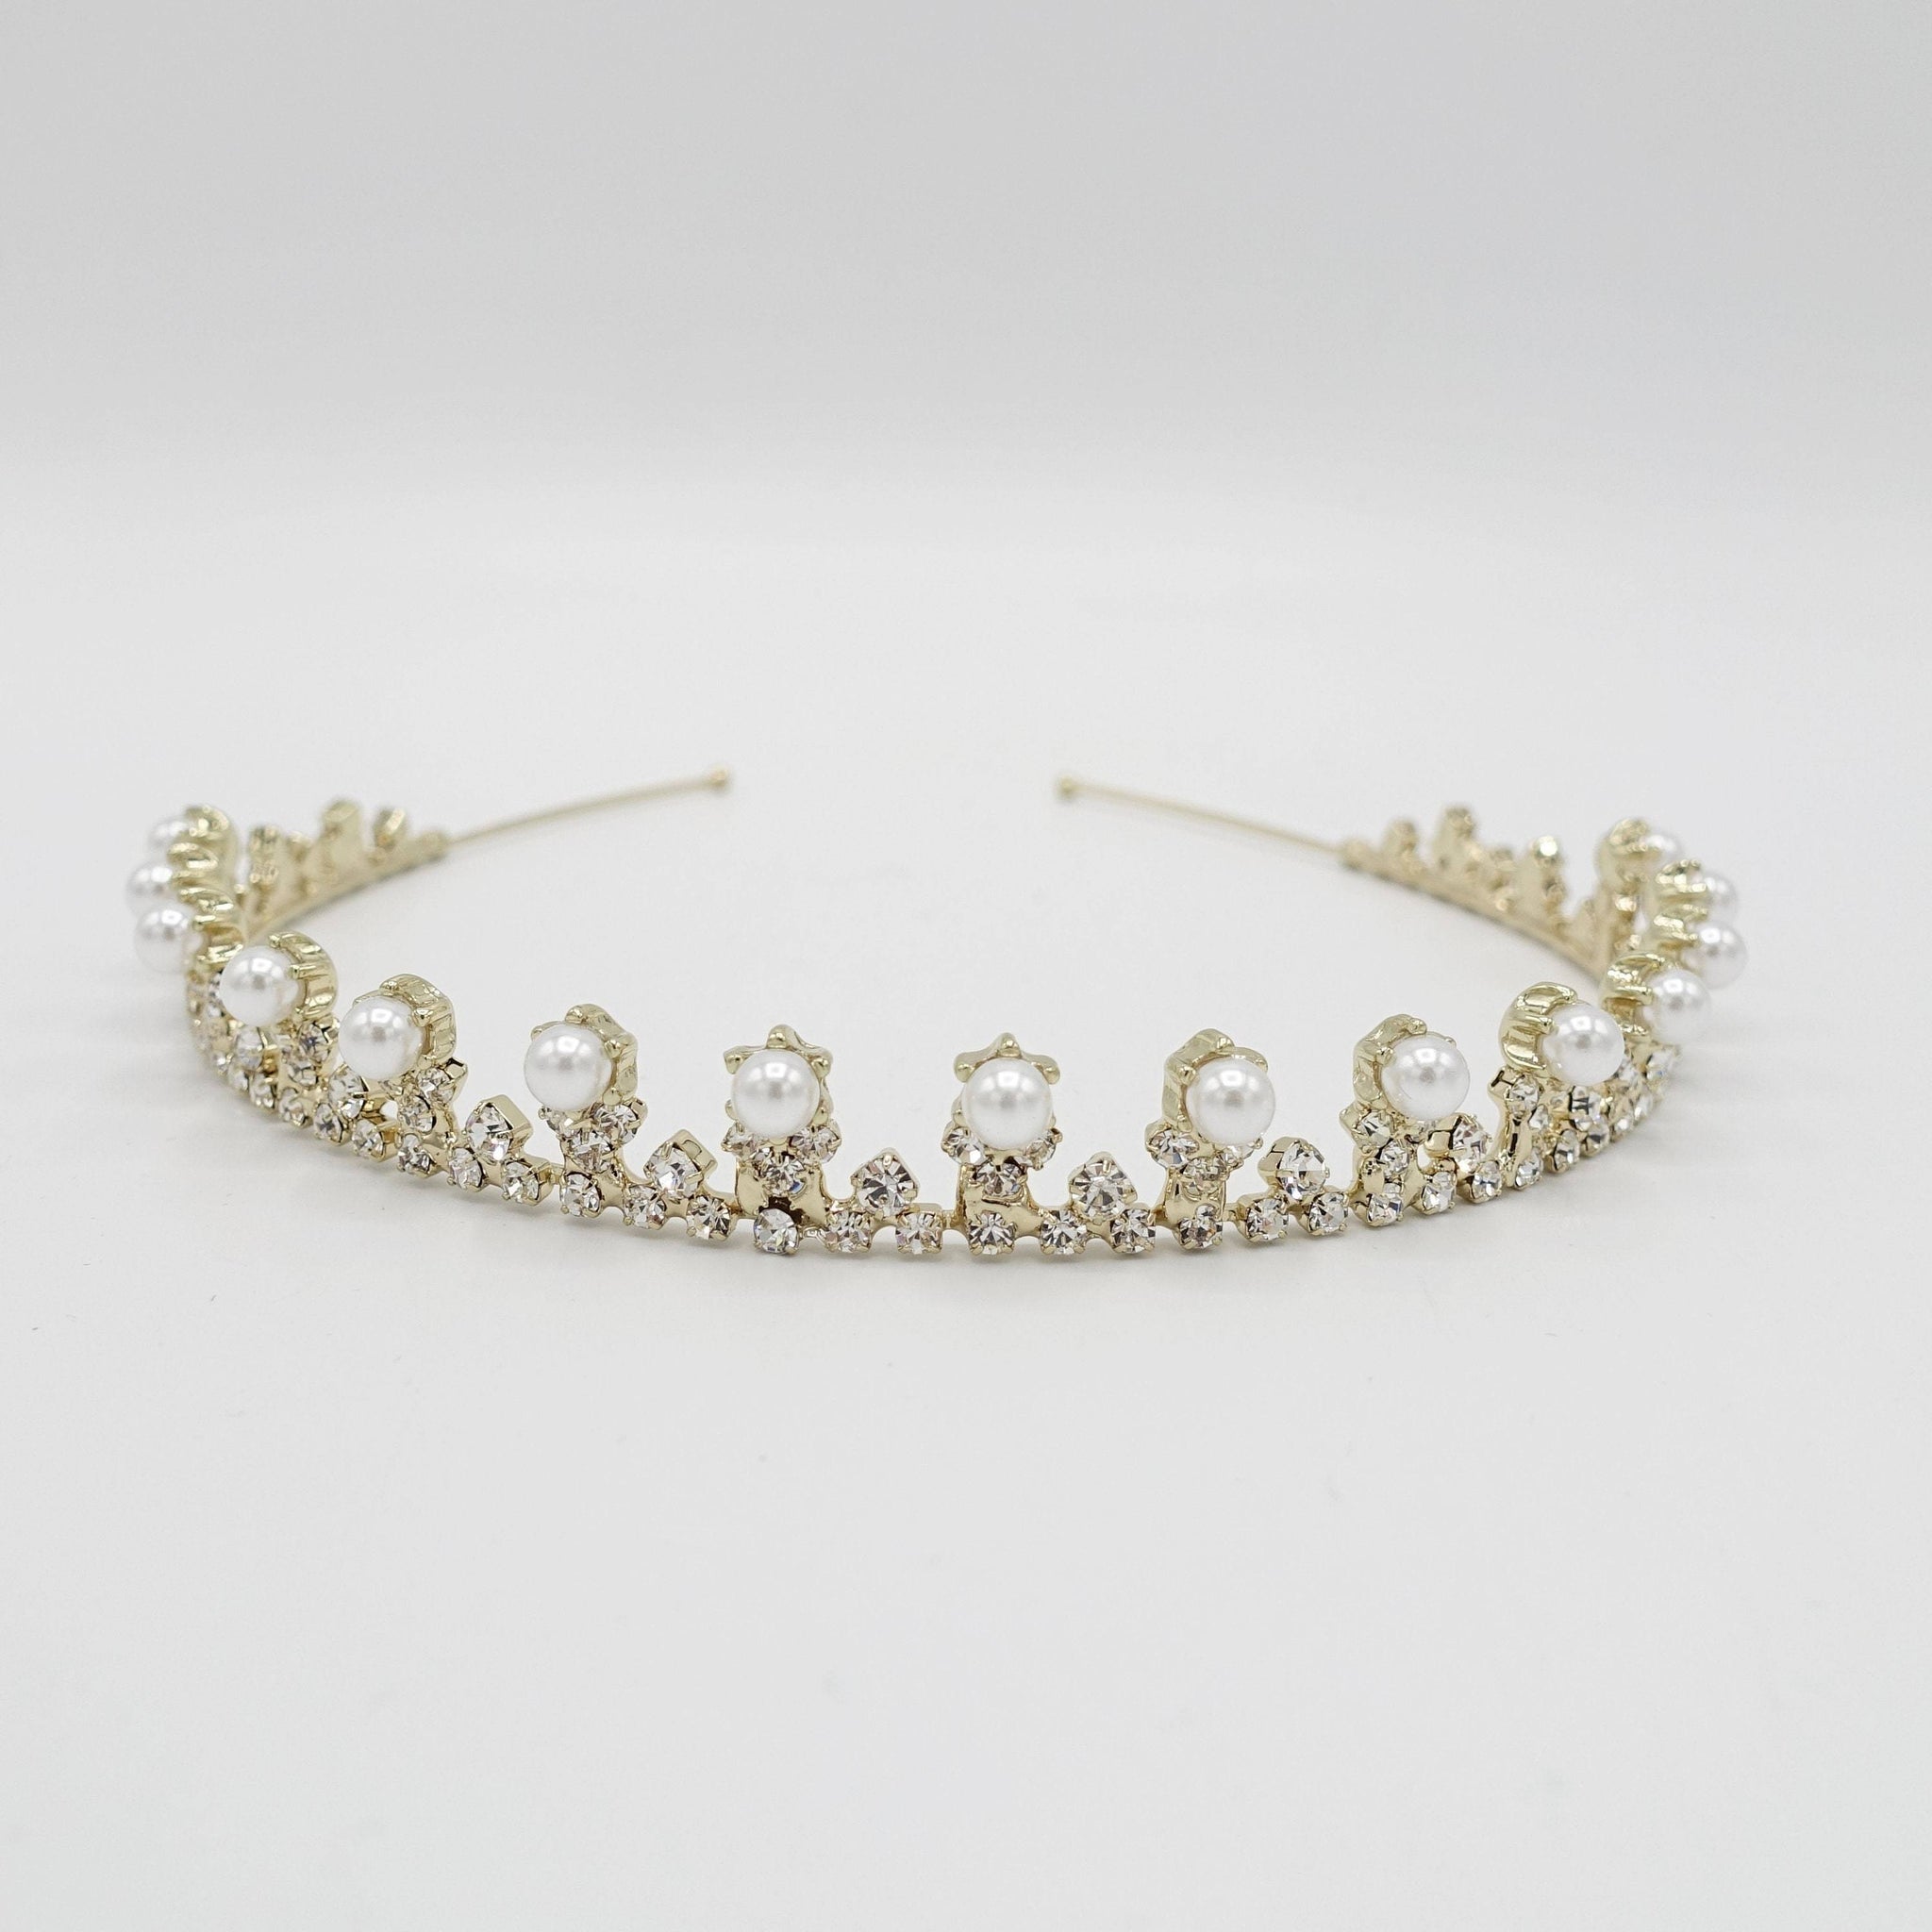 VeryShine Headband pearl rhinestone bridal headband bling tiara hair accessory for brides